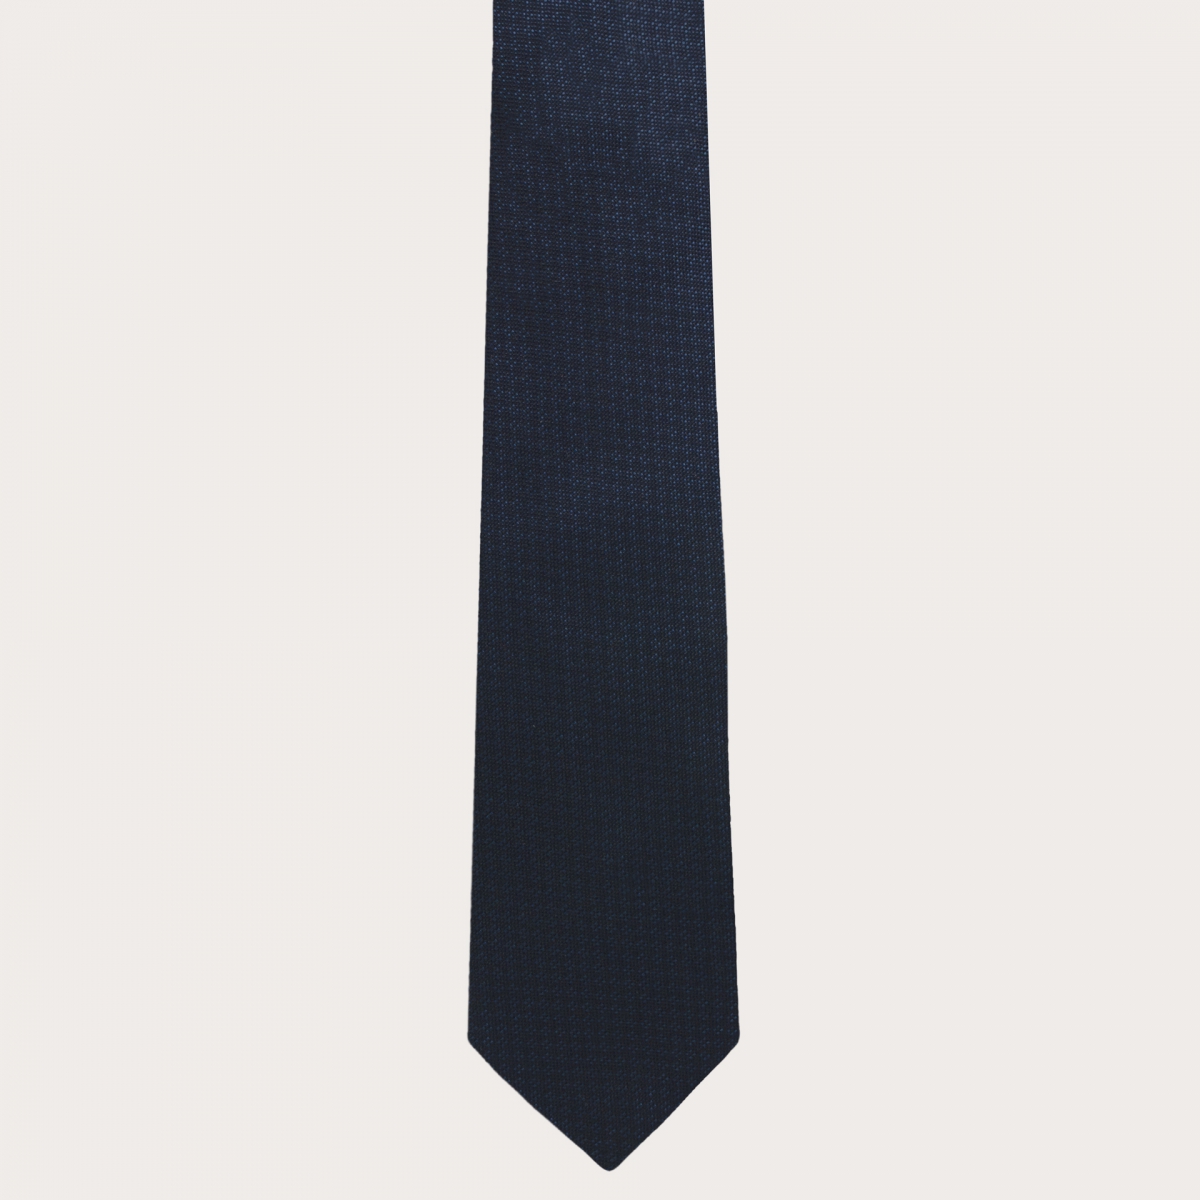 Elegant necktie in jacquard silk, blue micro-pattern